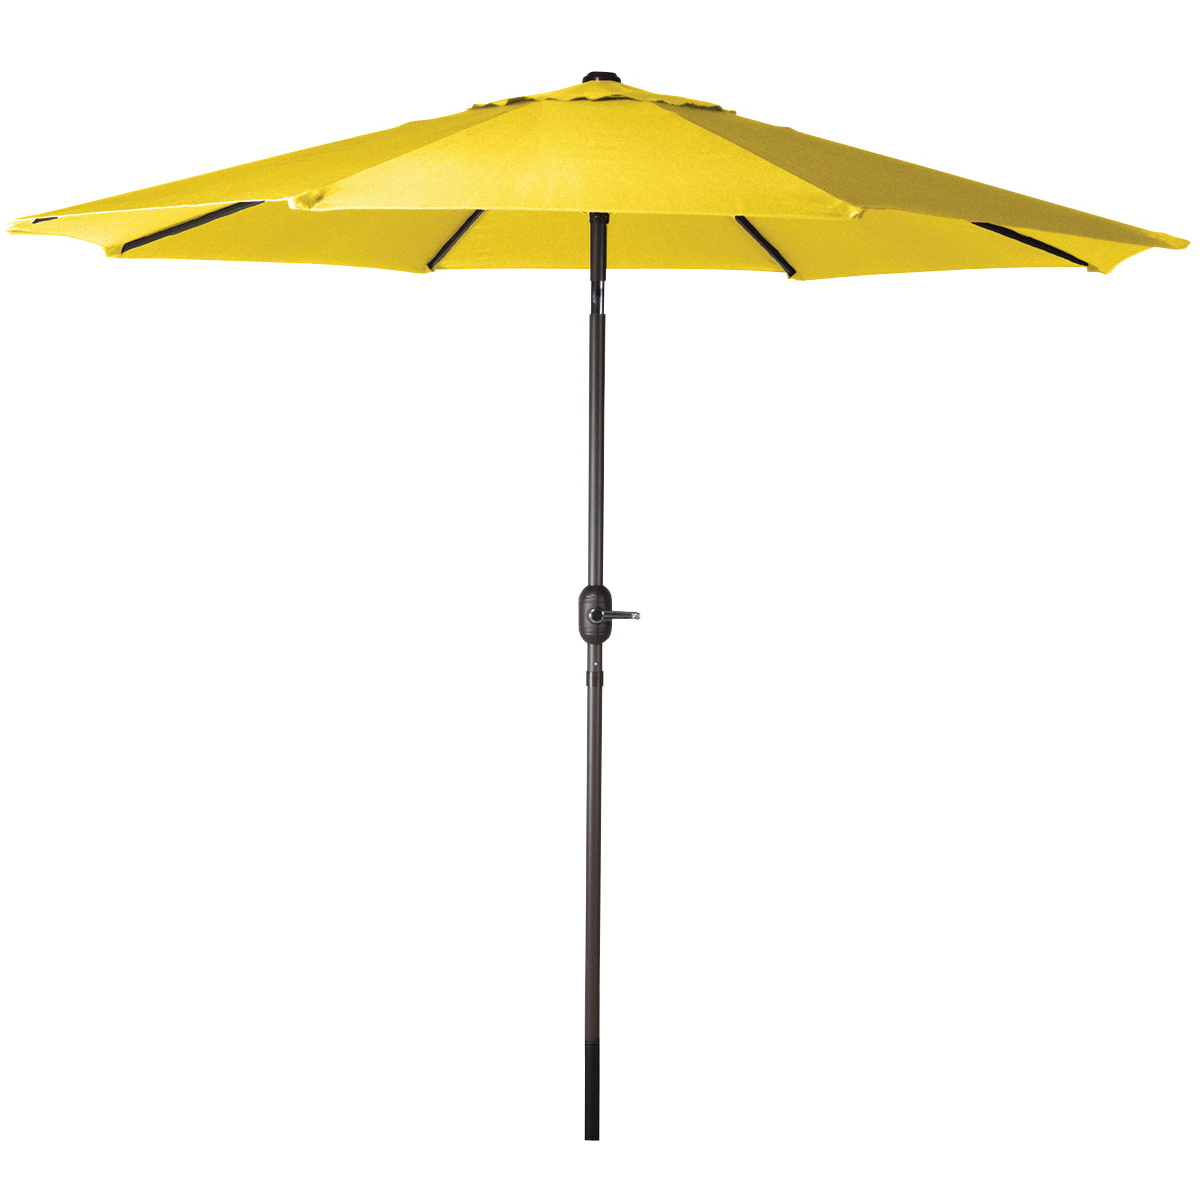 60038 Crank Umbrella, 92.9 in H, 107.9 in W Canopy, 107.9 in L Canopy, Round Canopy, Steel Frame